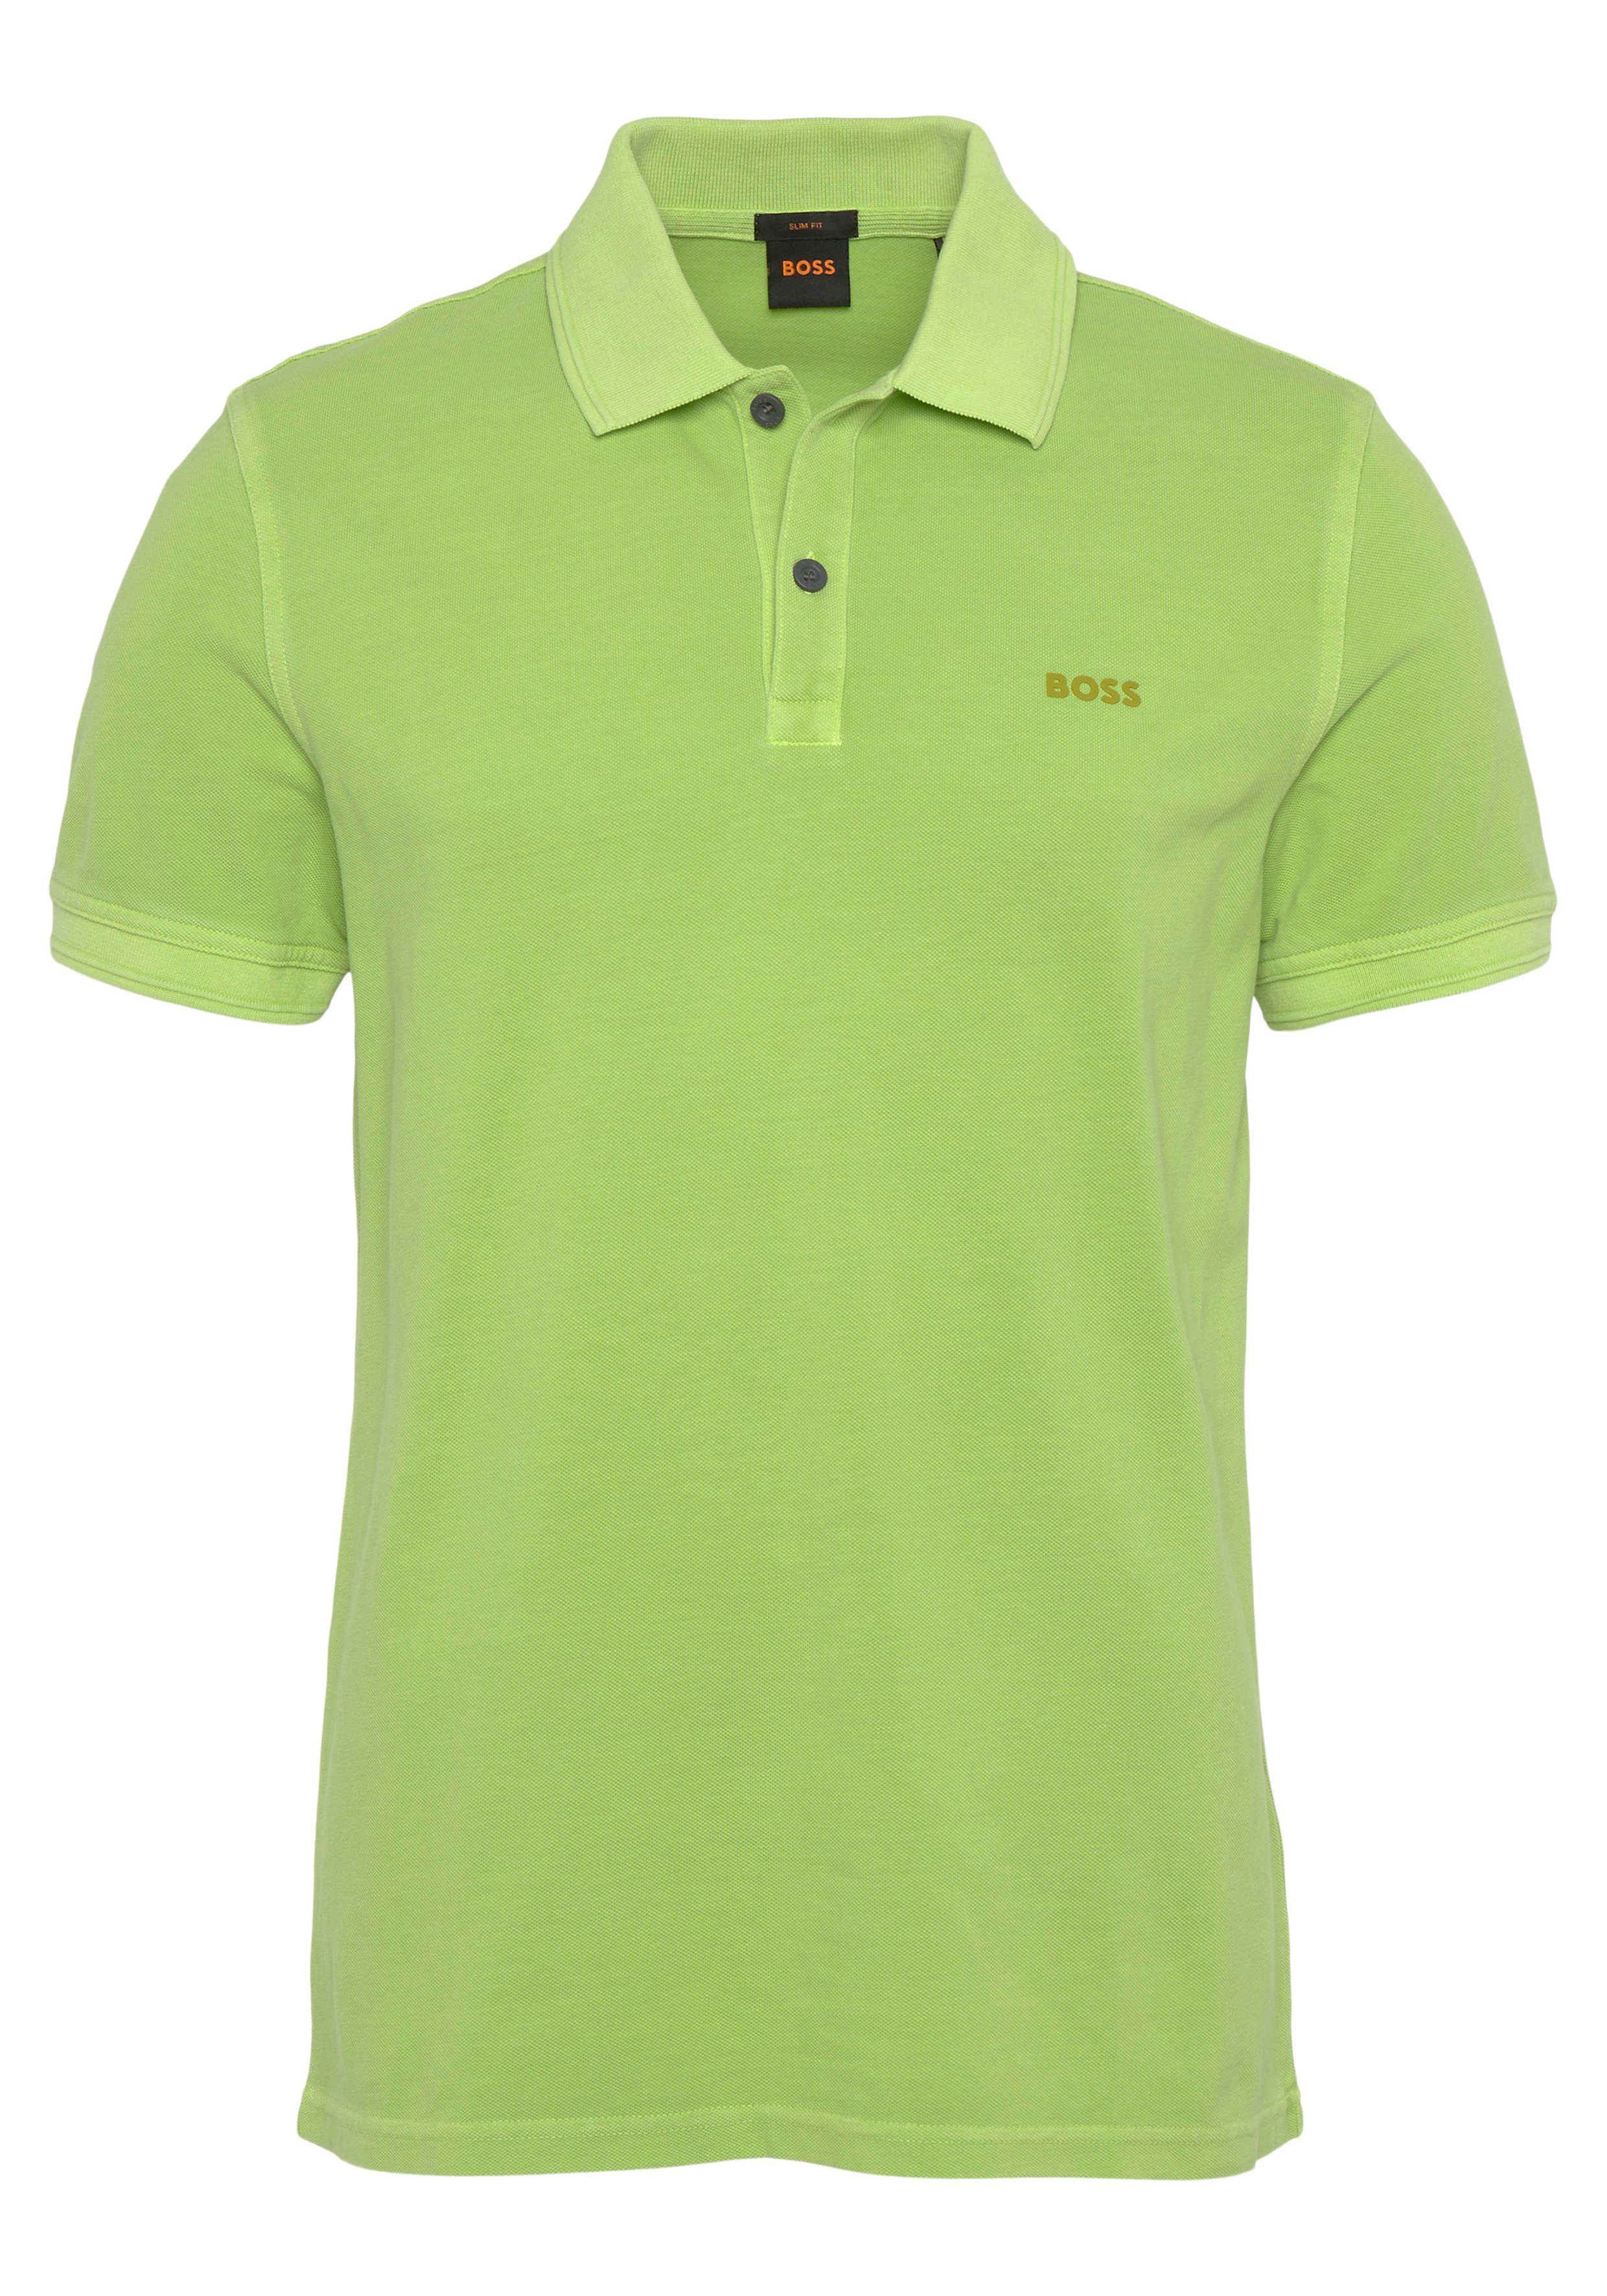 BOSS ORANGE Poloshirt Prime mit am Logoschriftzug Green Bright Brustkorb